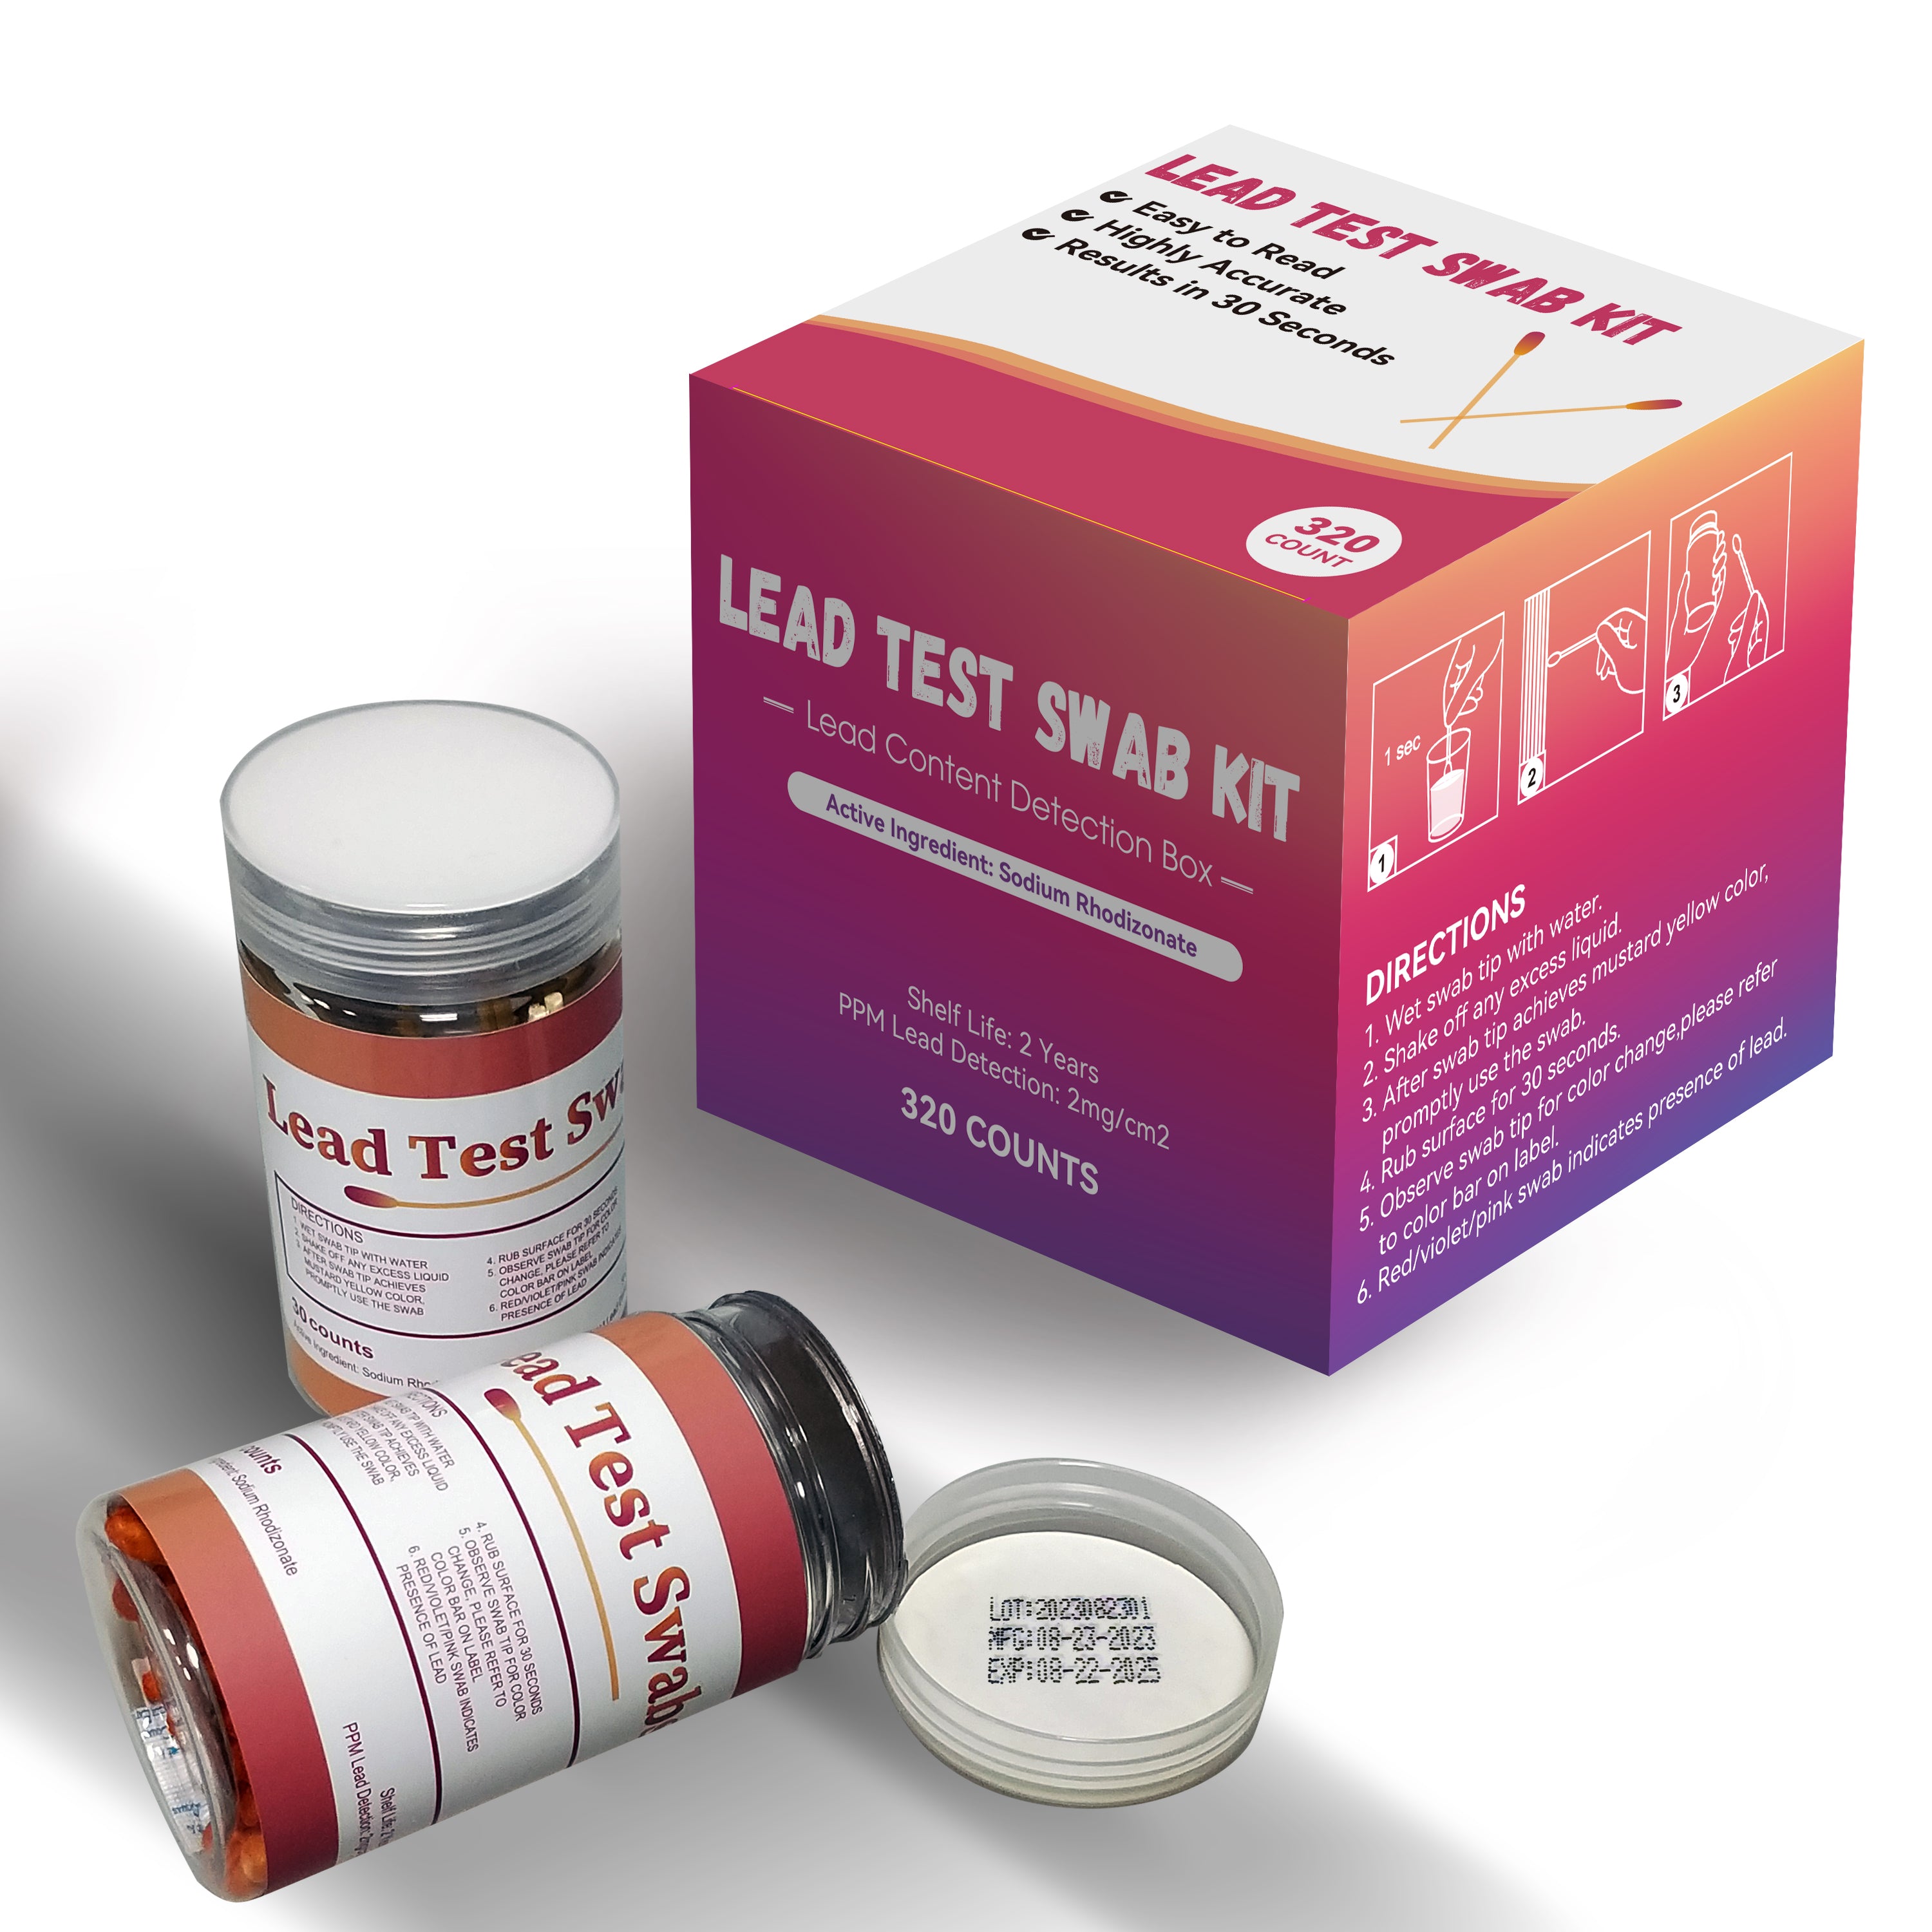  Lead Test Kit in Dust Wipes 20PK (5 Bus. Days